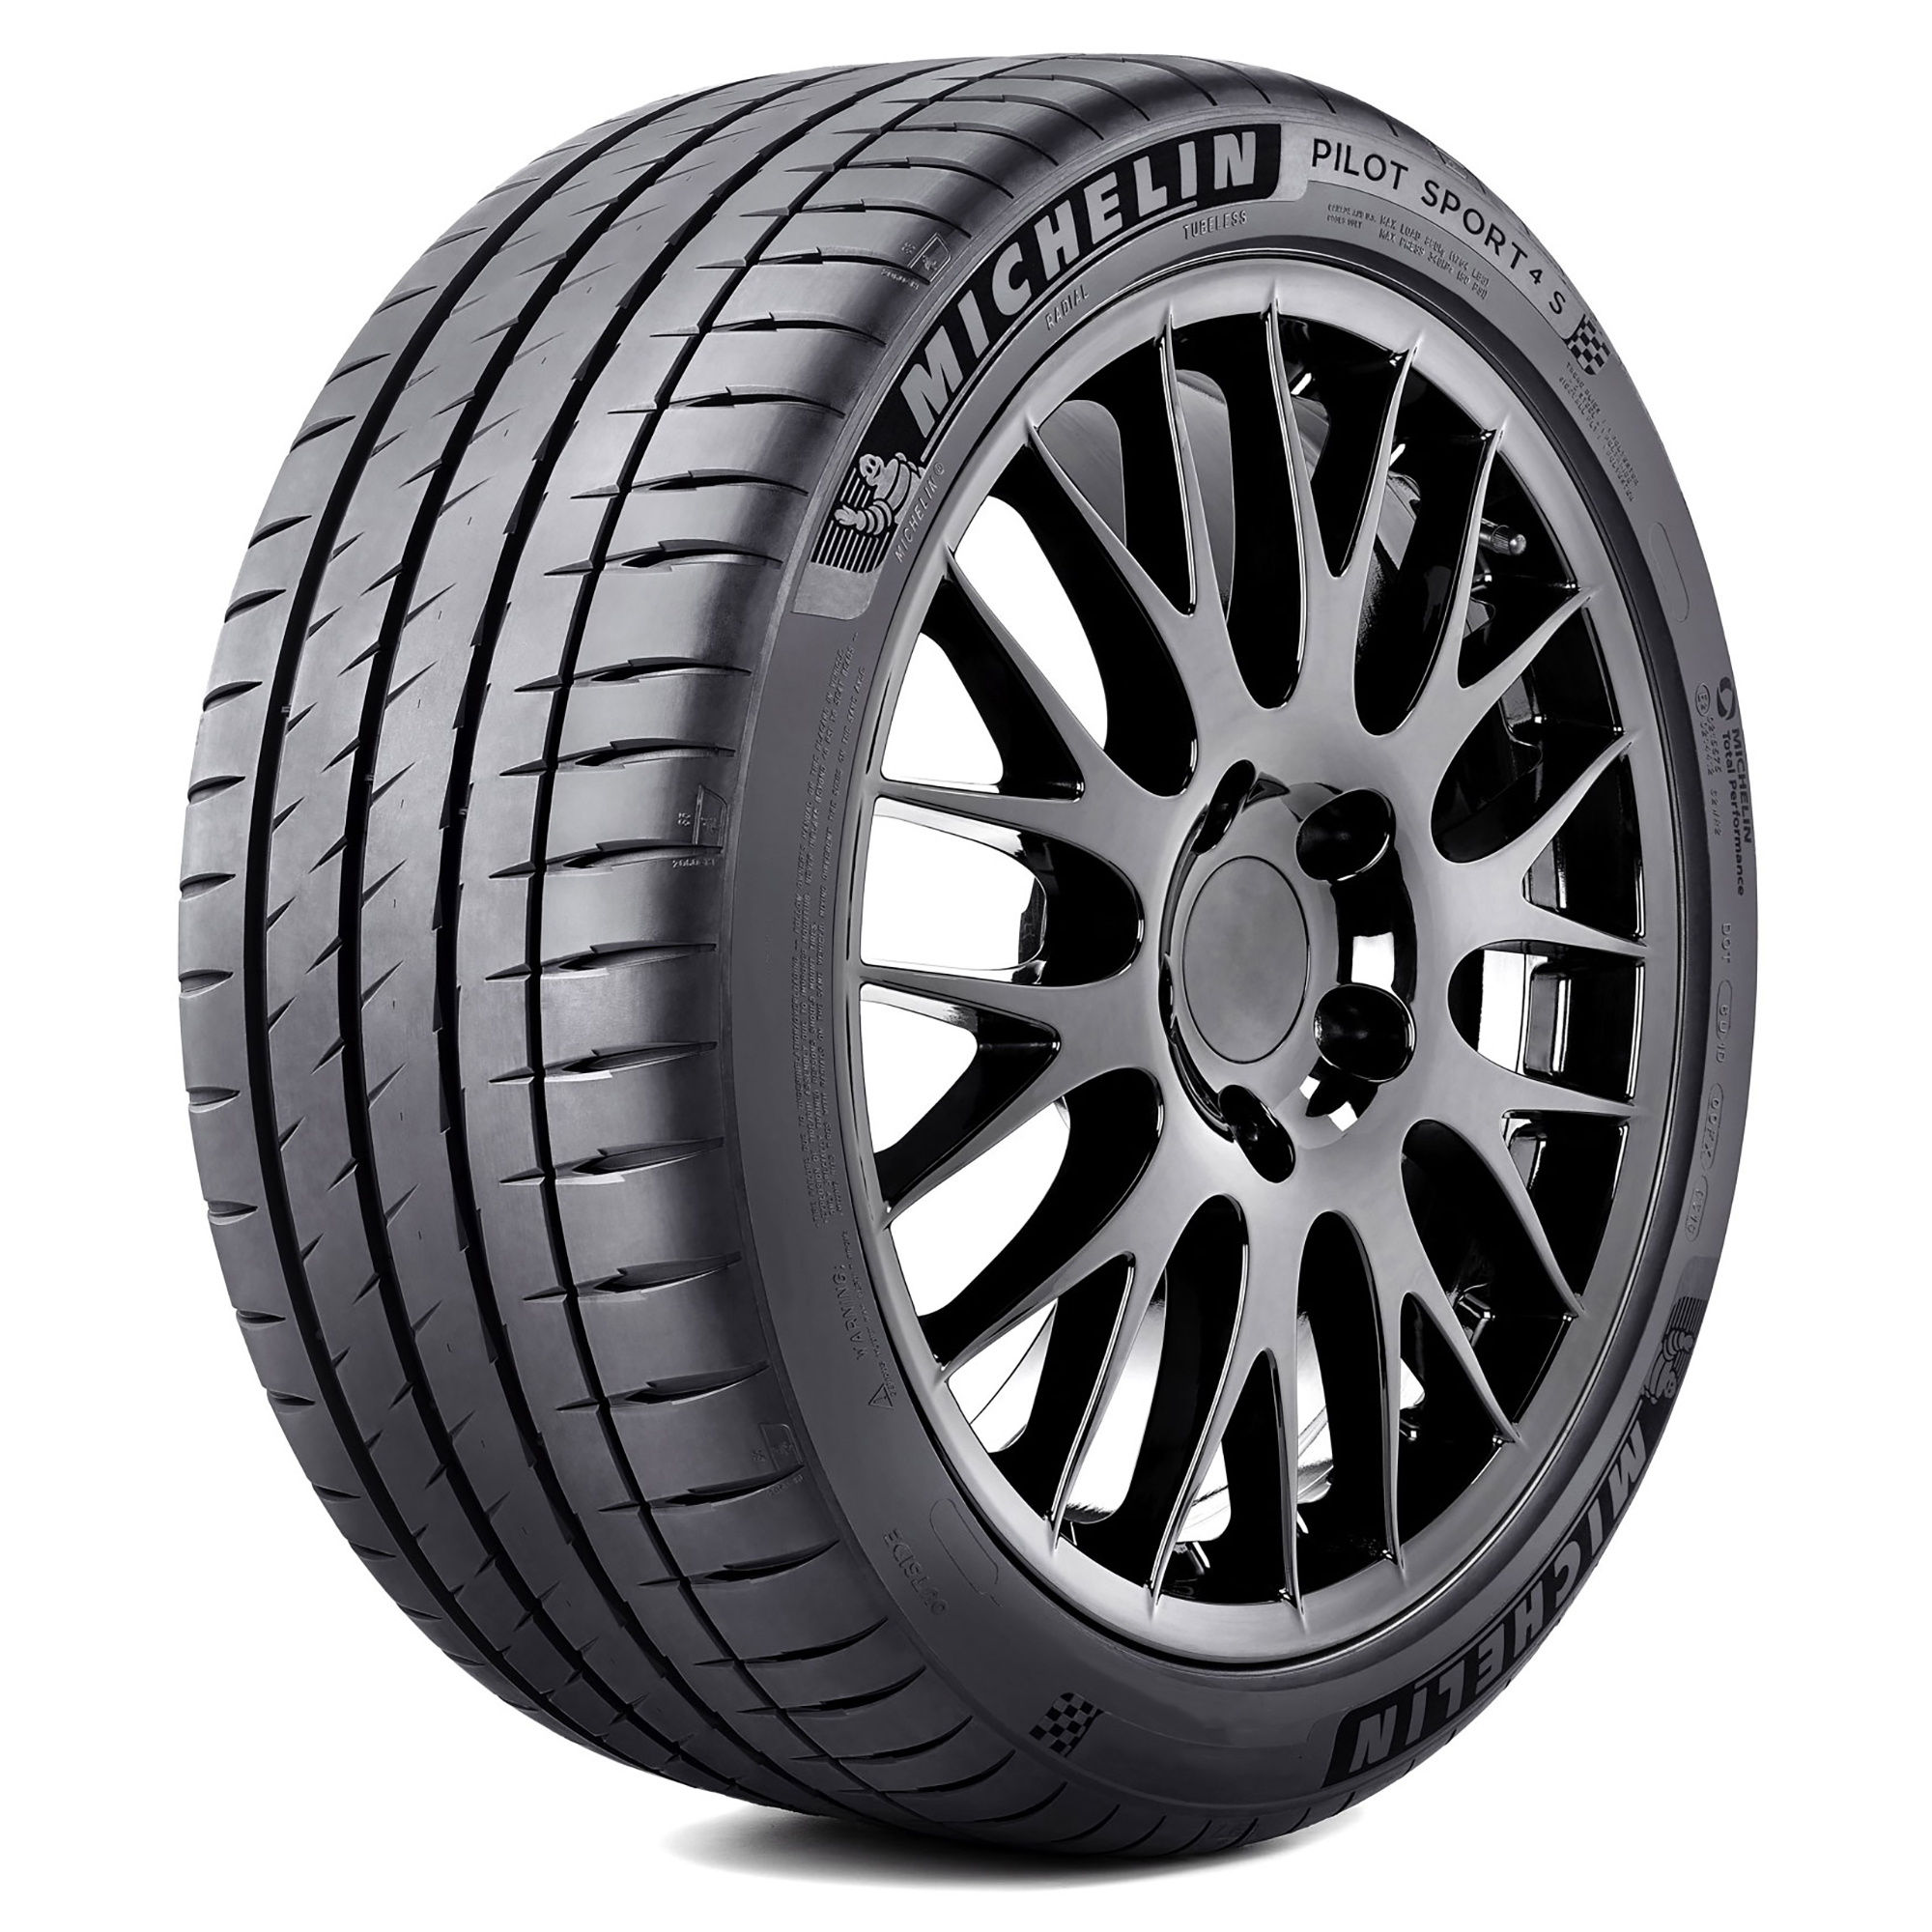 Michelin Pilot Sport 4 S Summer 235/40ZR18/XL (95Y) Tire - image 1 of 4